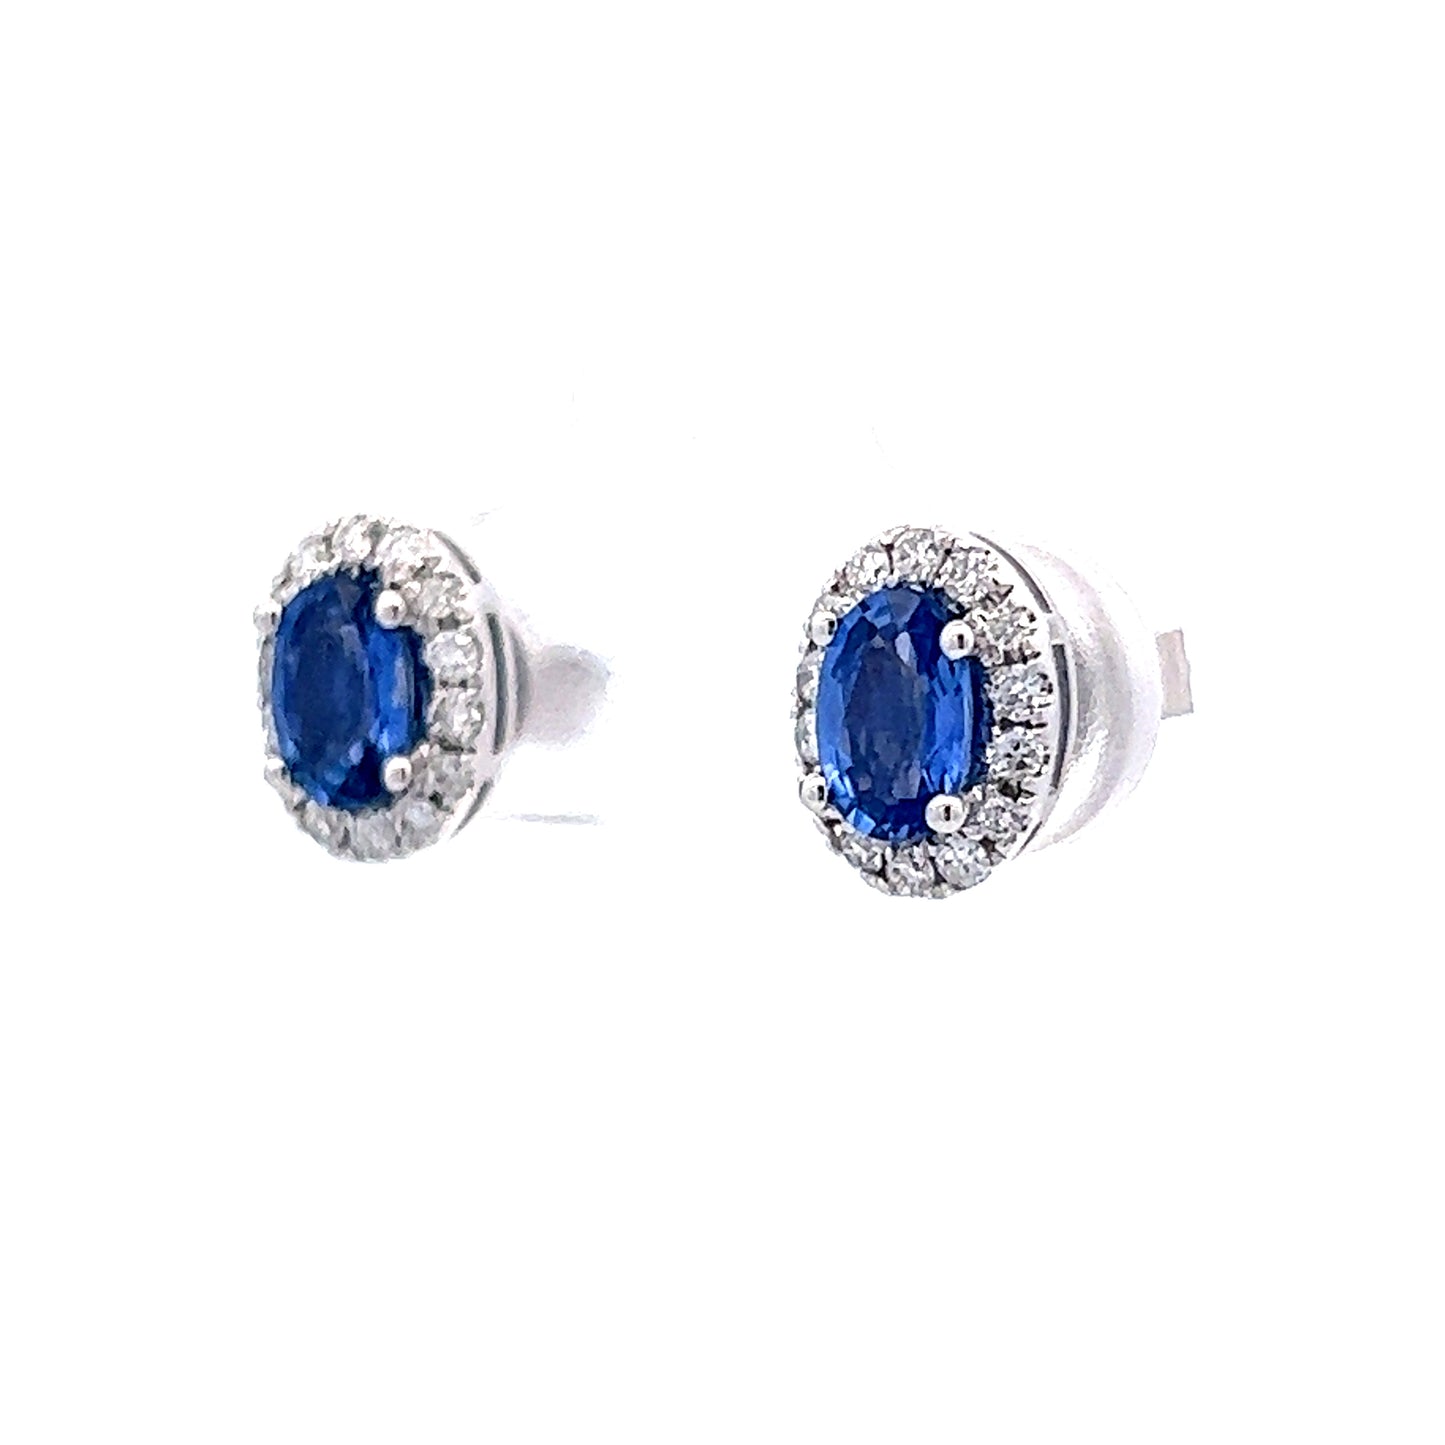 Blue Sapphire & Diamond Earrings in 14k White Gold